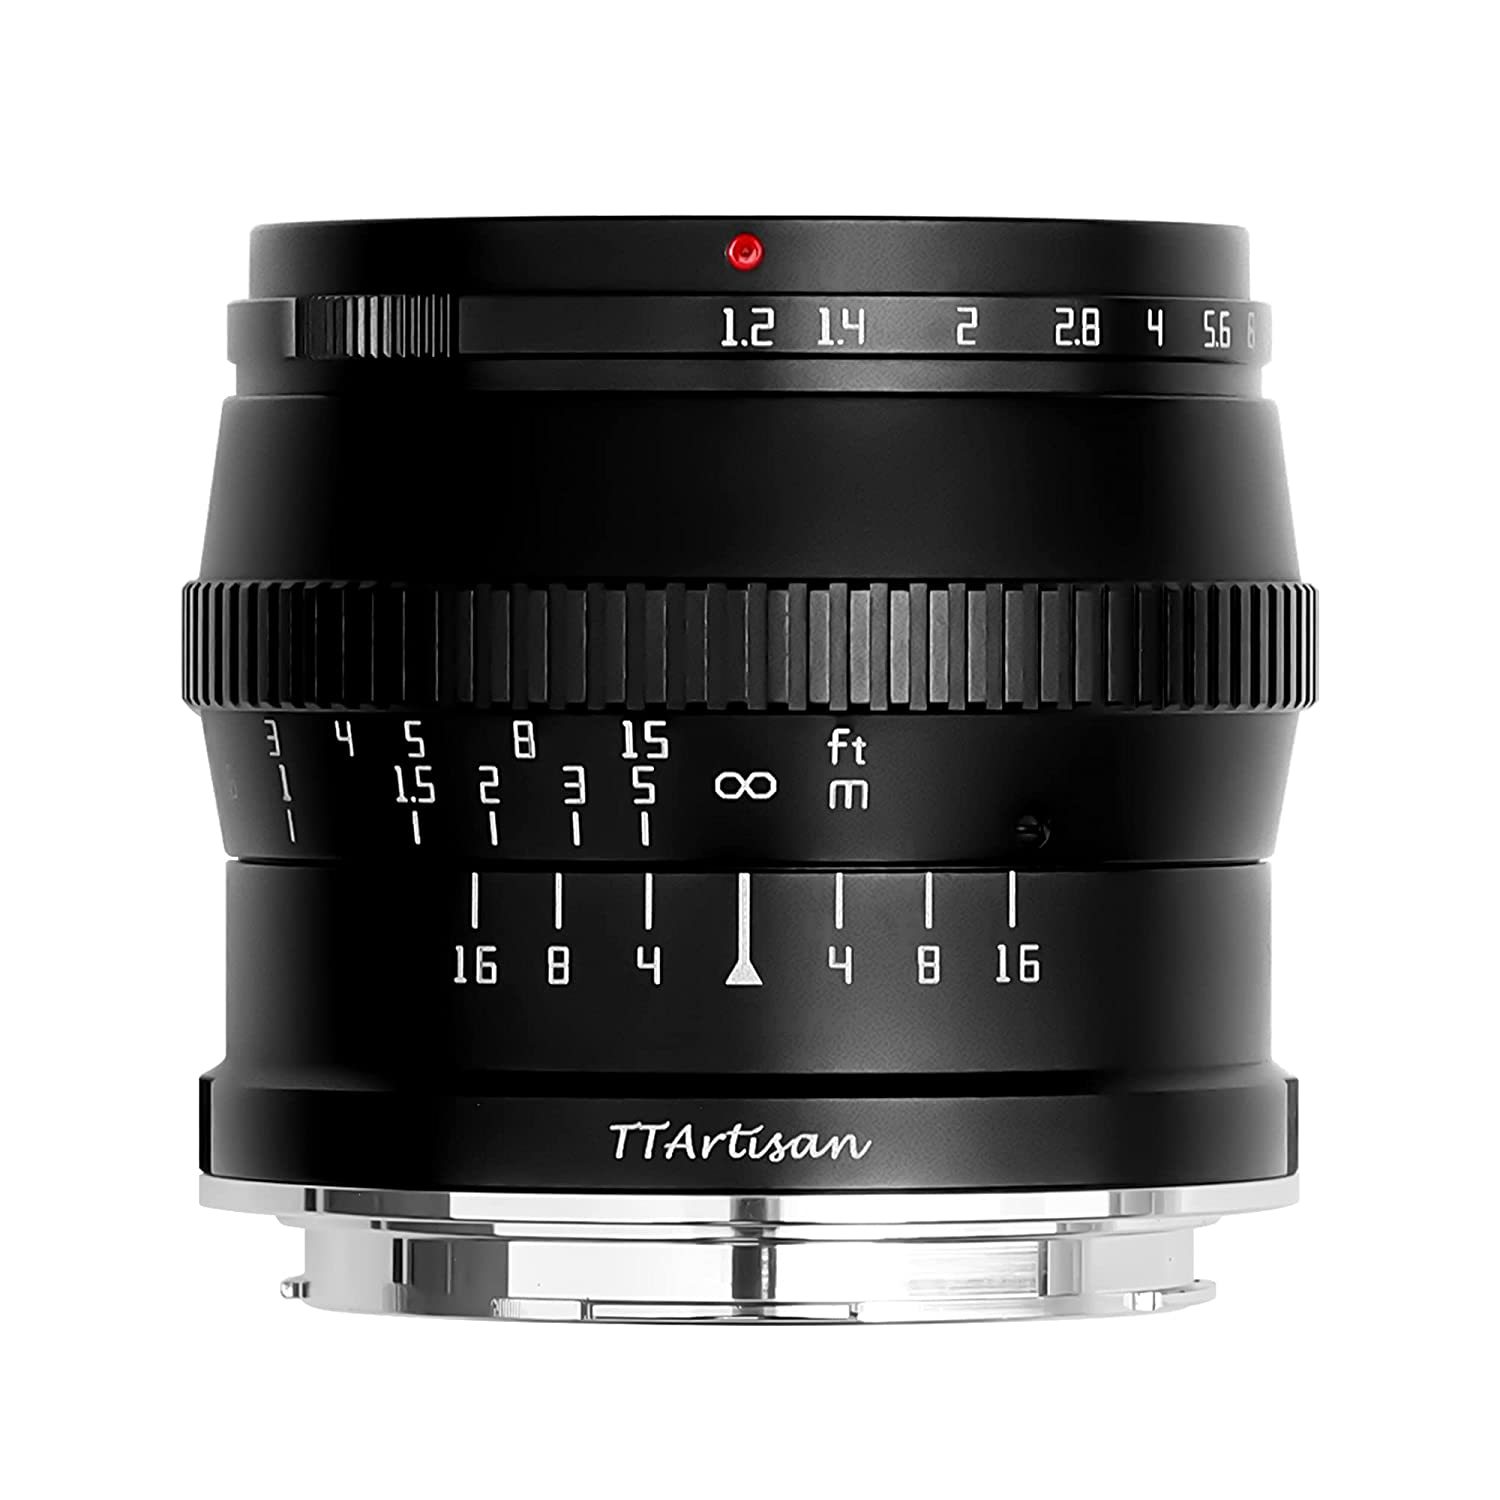 50Mm F1.2 Aps-C Large Aperture Manual Focus Lens For Leica L Mount Camera Like L